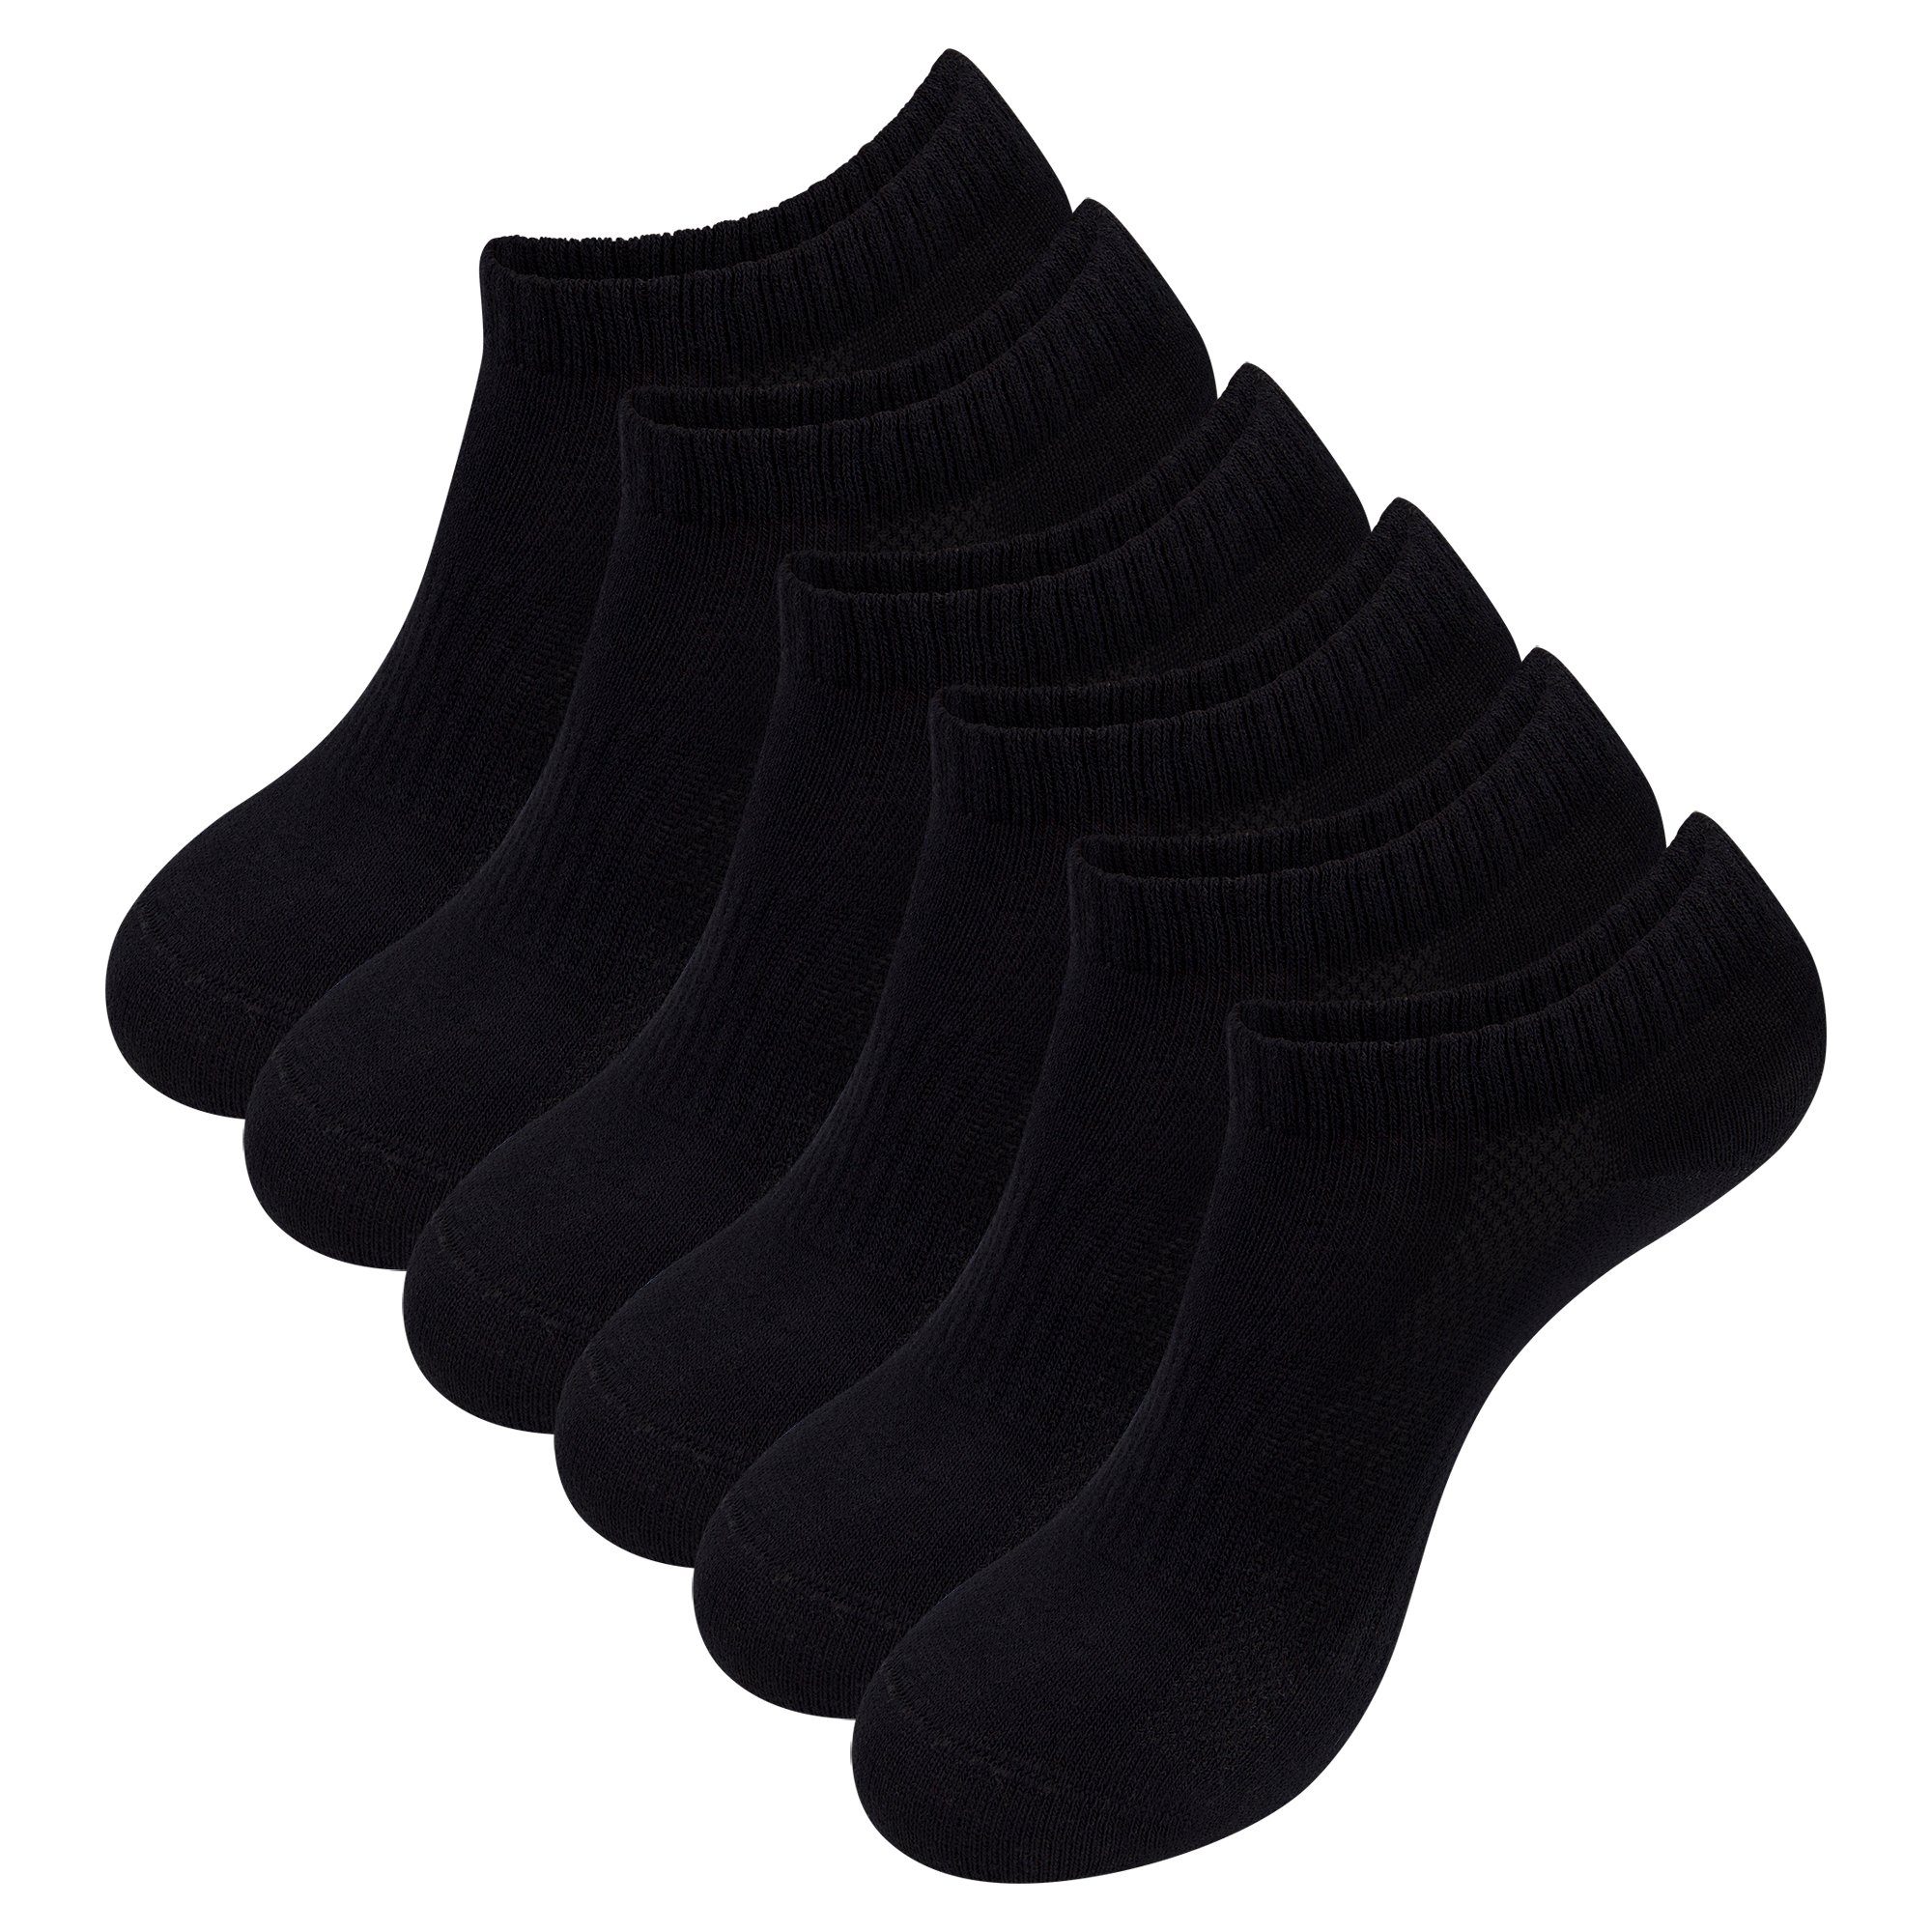 Universum Sportwear Sneakersocken Herren und Damen Ankle Socks 6er-Pack (6er-Pack, 6 Sockenpaare) Sneaker Socken